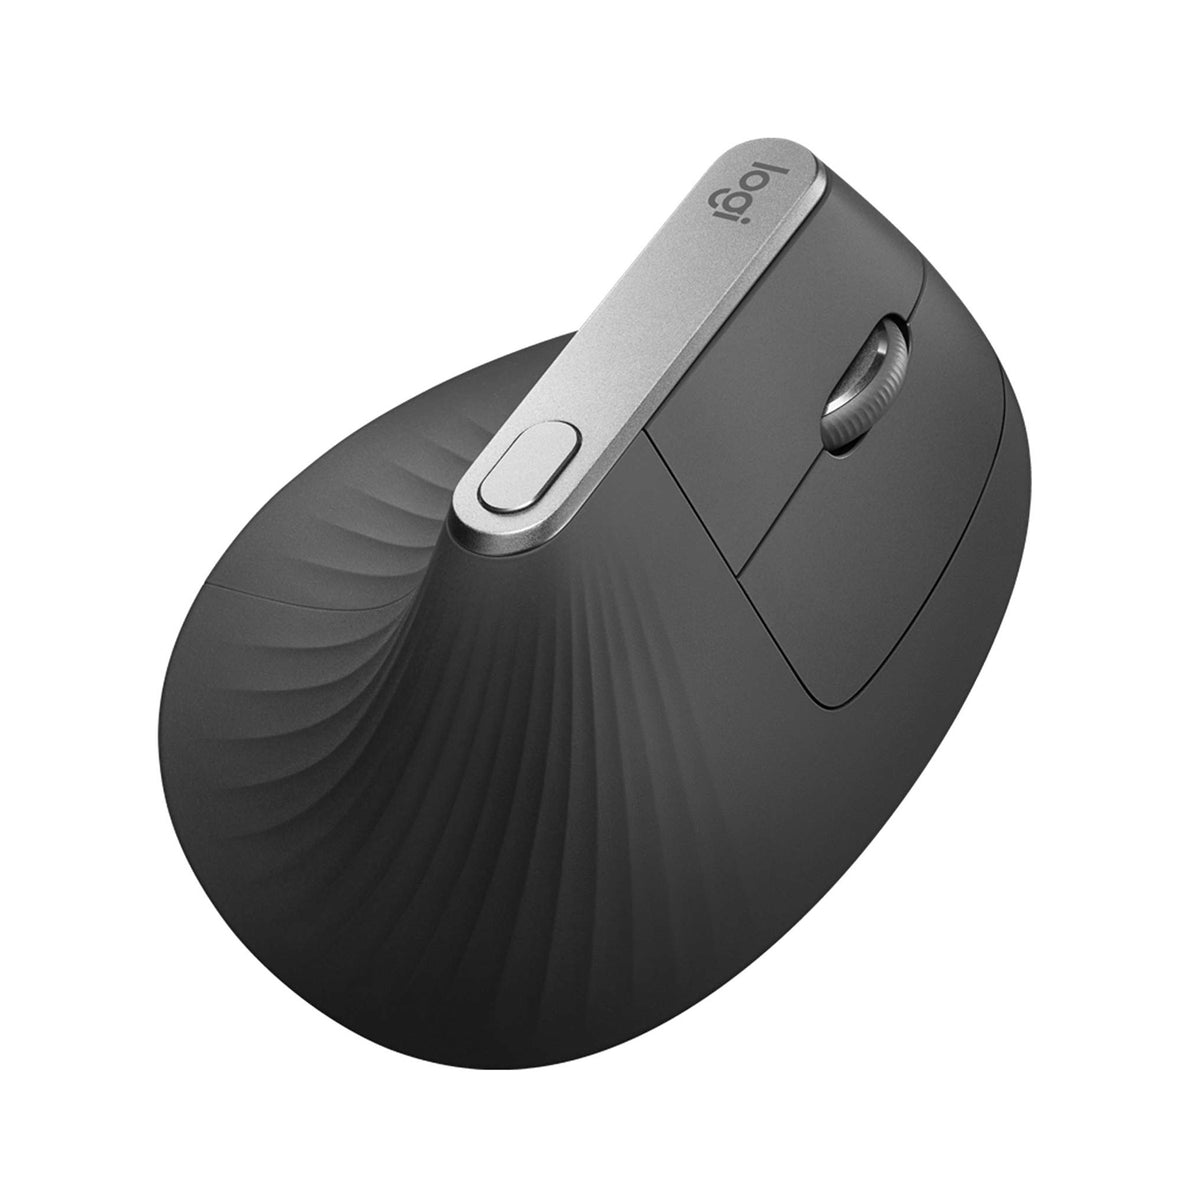 Logitech MX Vertical Wireless Mouse